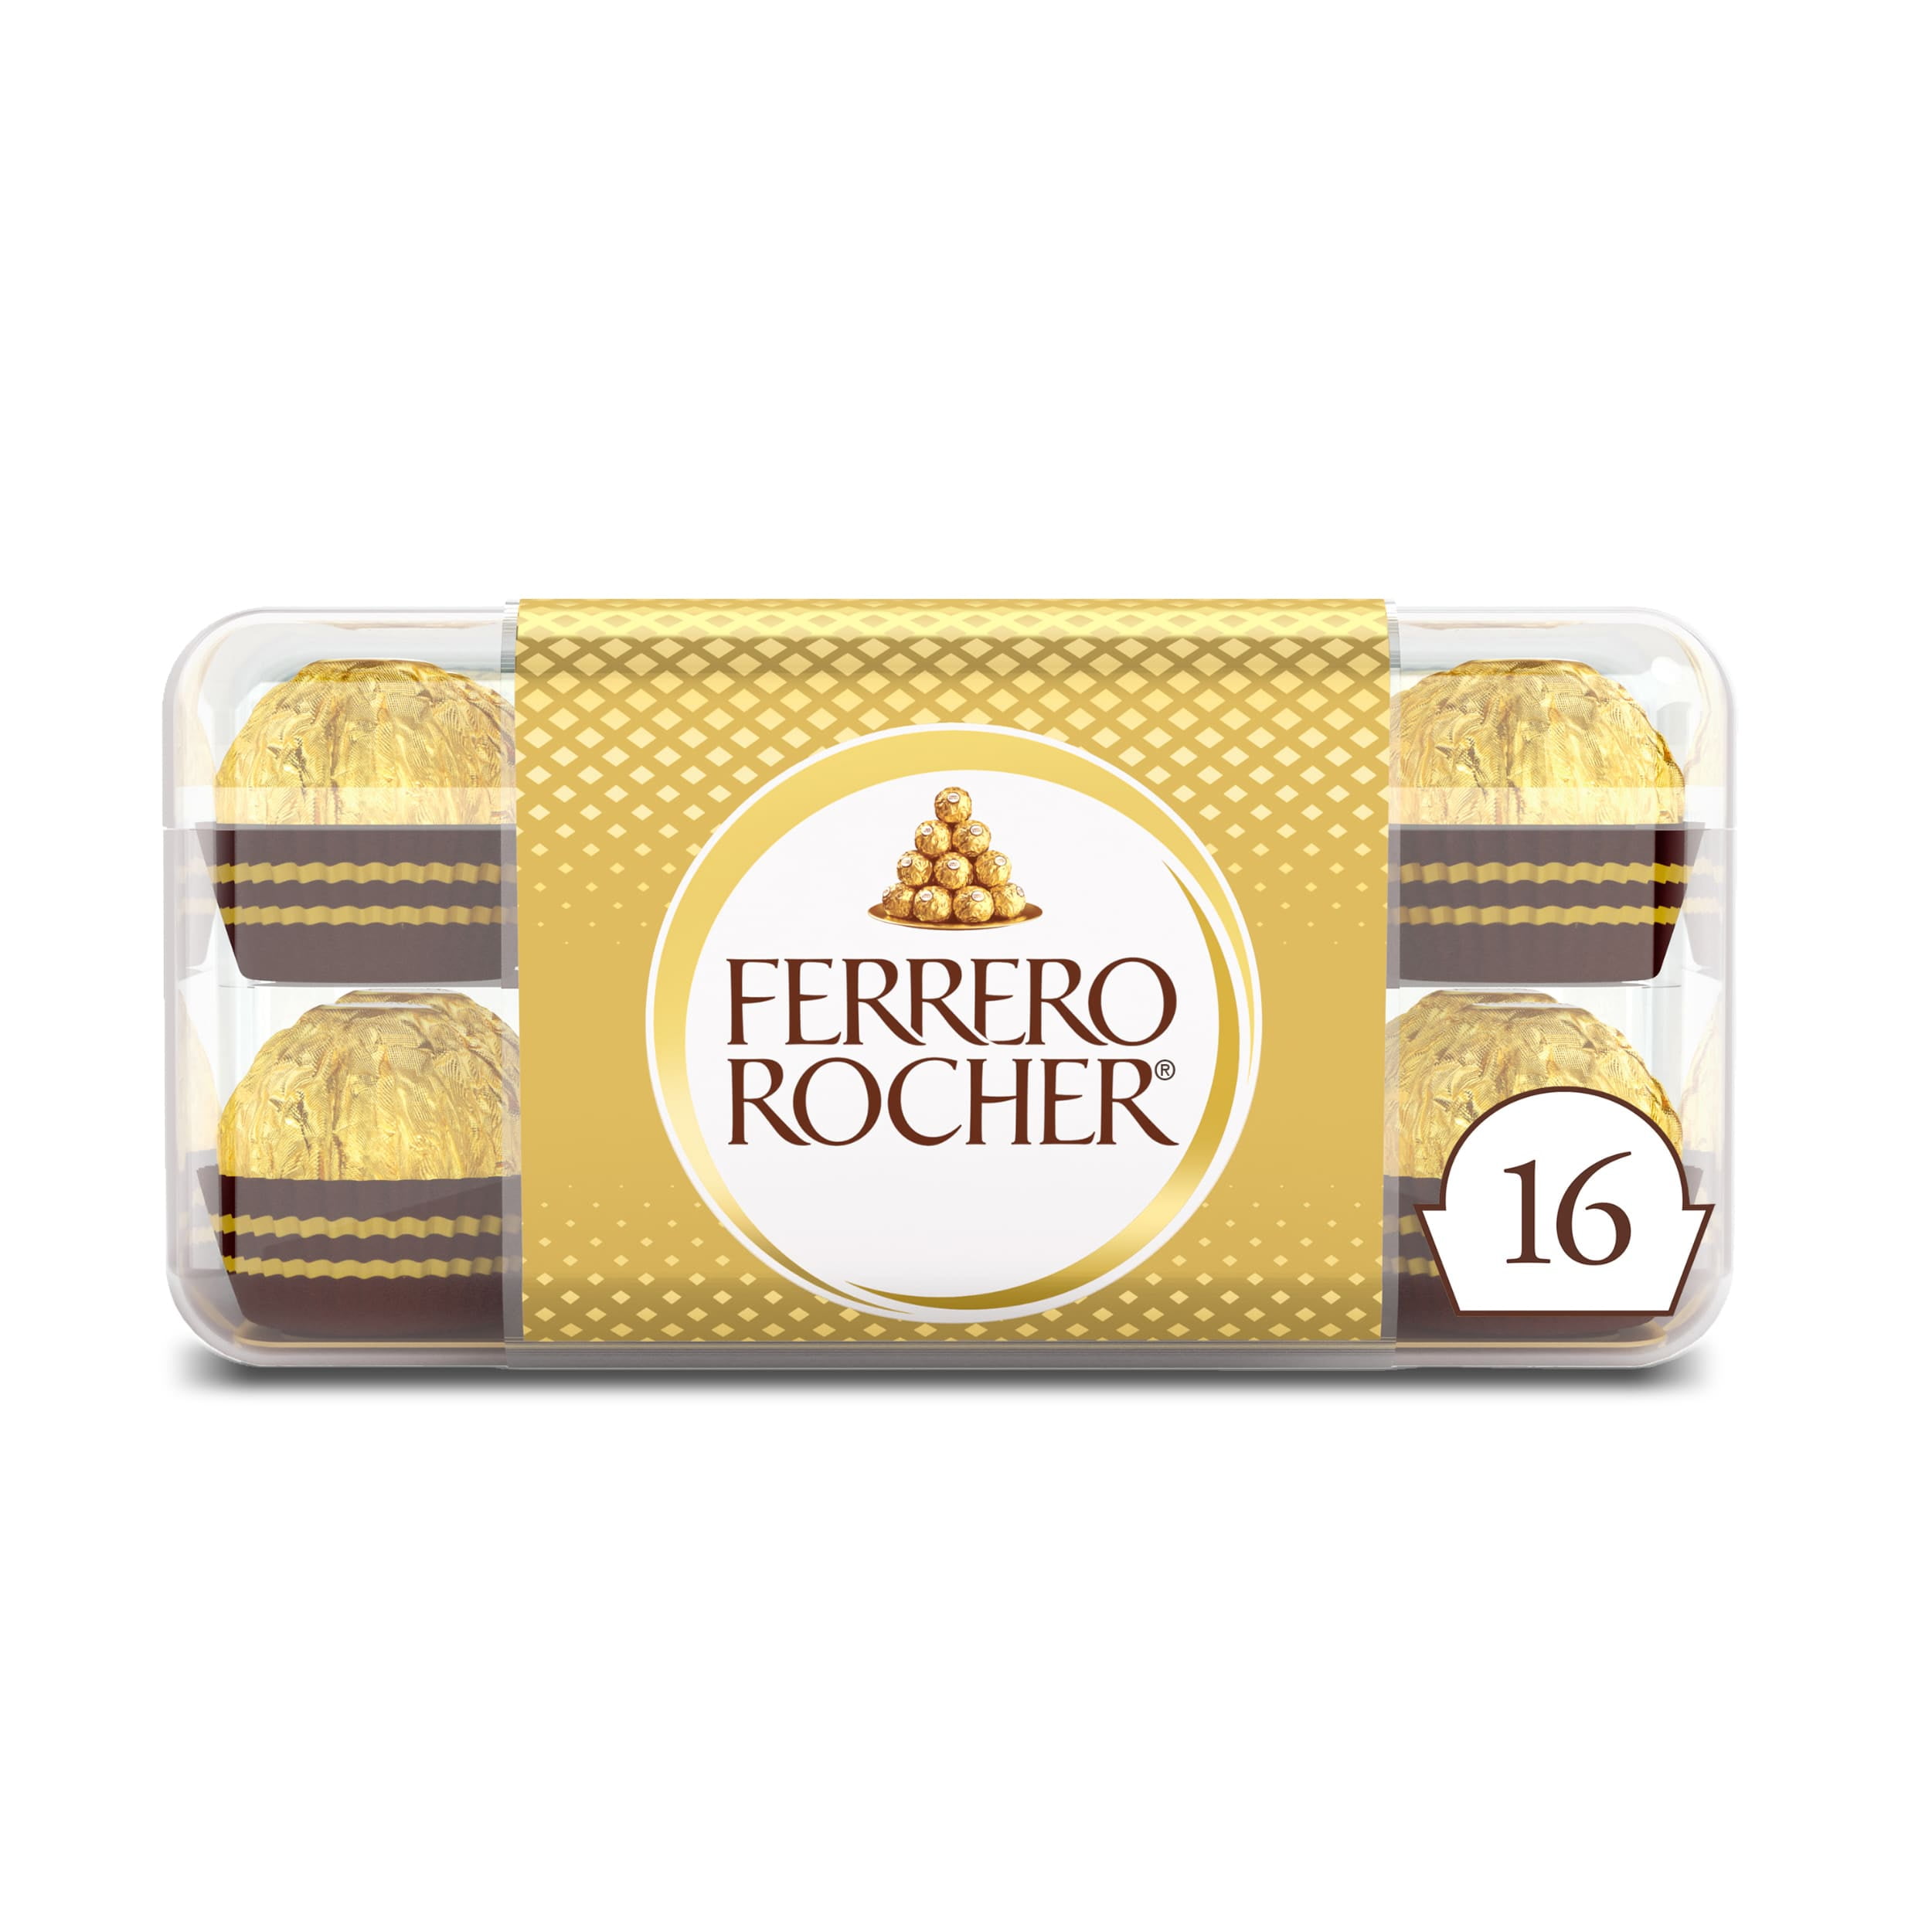 Ferrero Rocher Premium Gourmet Milk Chocolate Hazelnut, Individually Wrapped Candy for Gifting, 7 oz